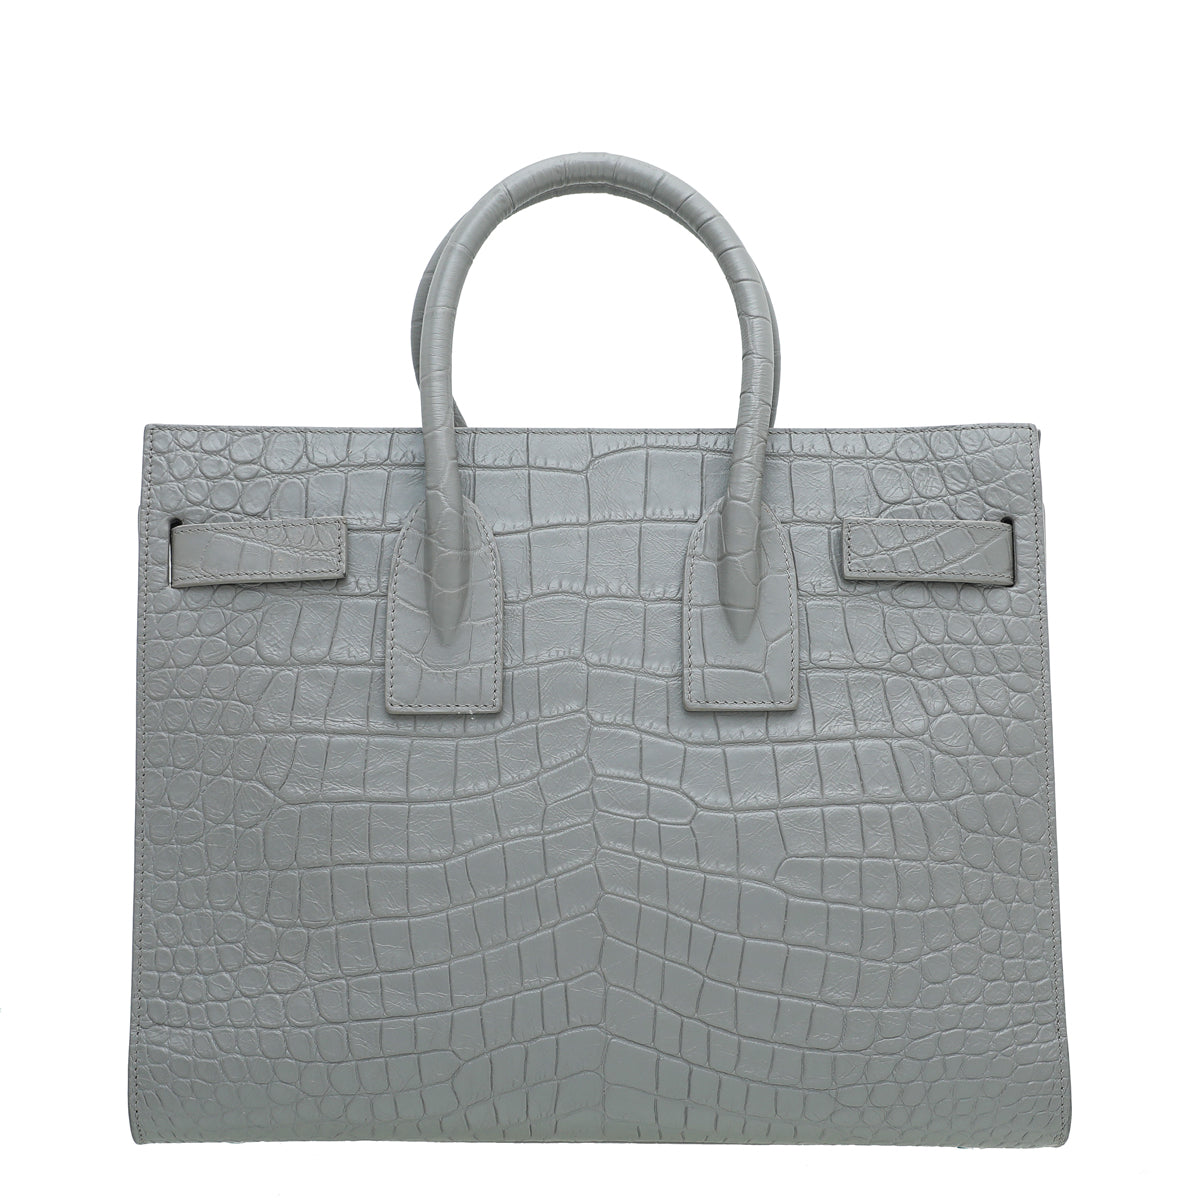 YSL Grey Croc Sac De Jour Small Bag